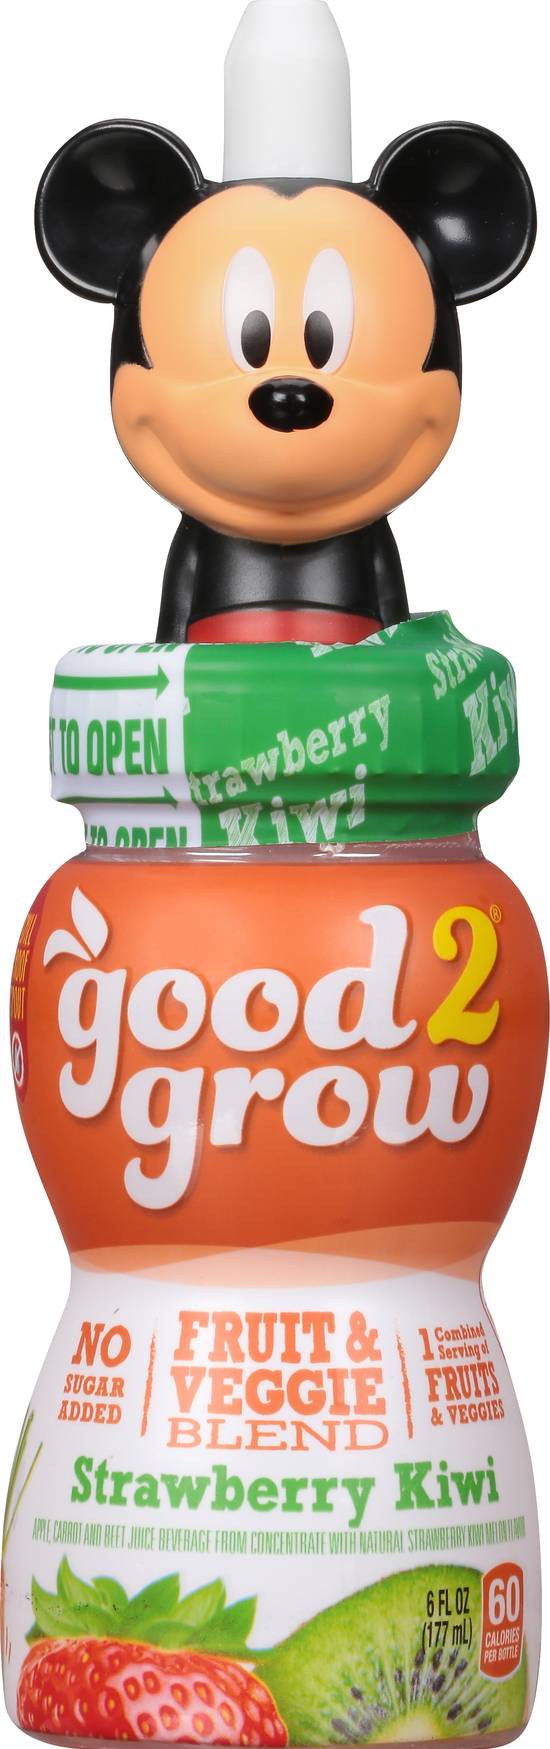 Good2grow Strawberry Kiwi Fruit & Veggie Blend (6 fl oz)